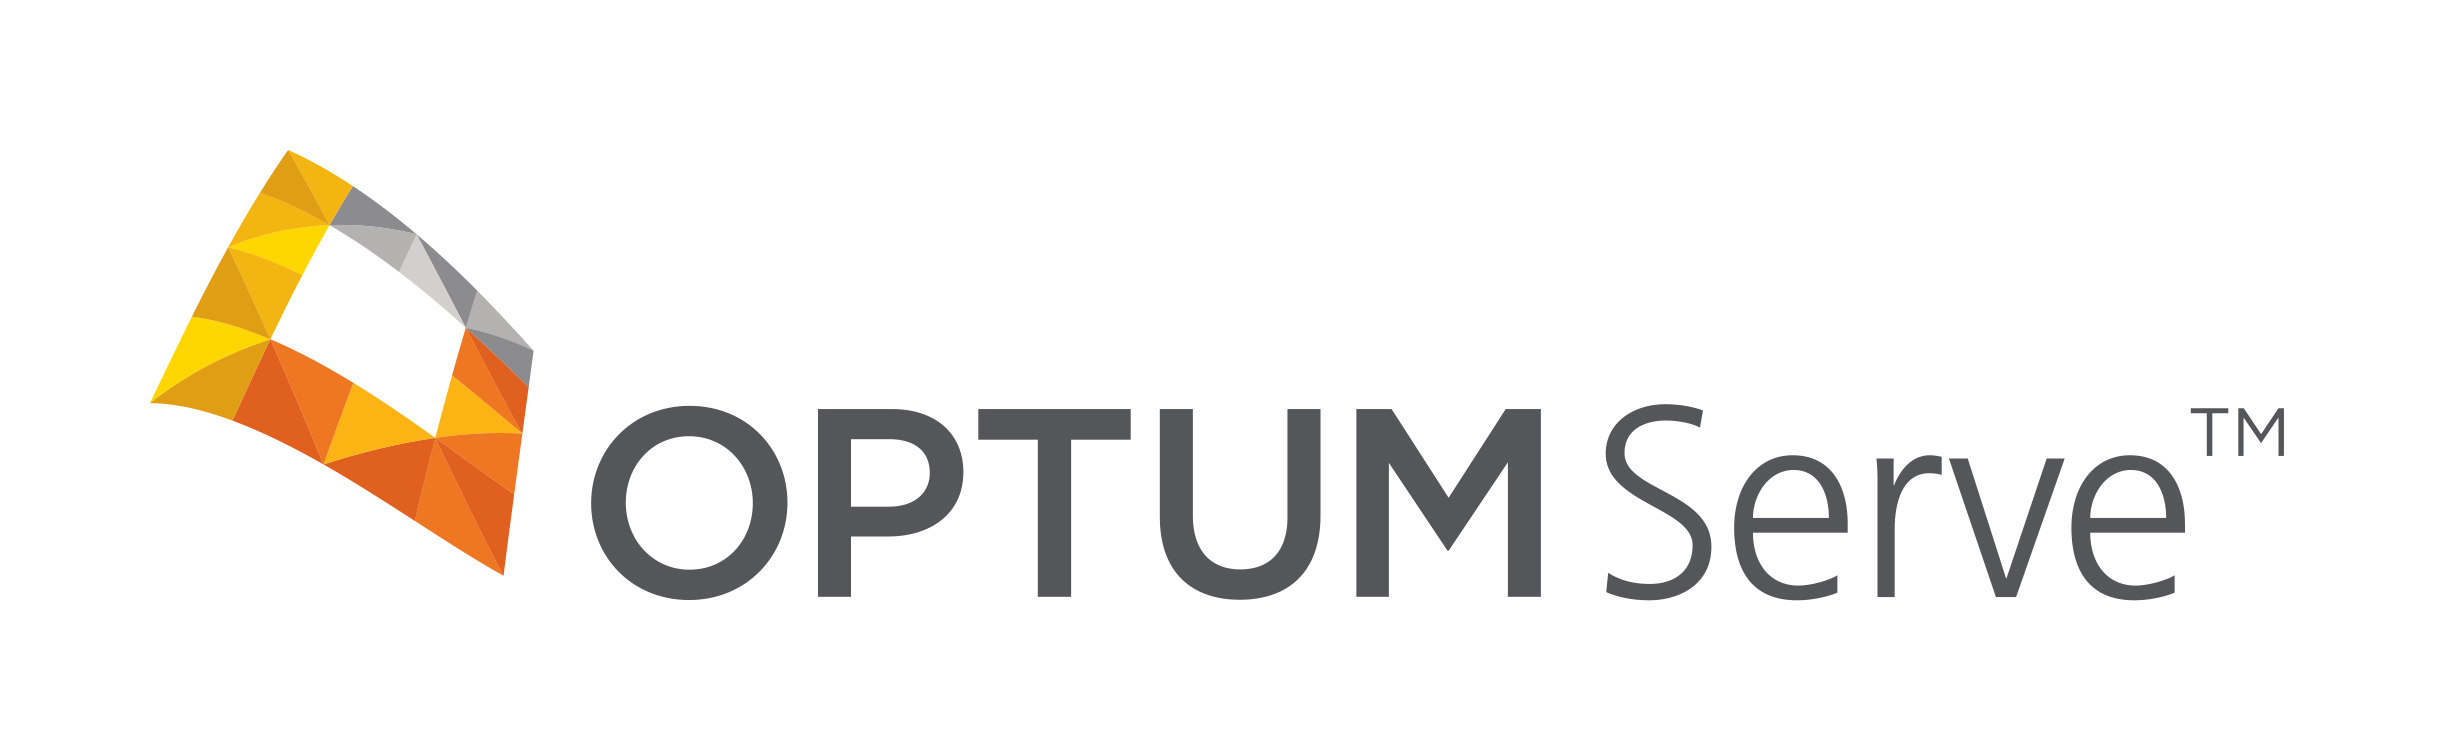 OptumServe logo